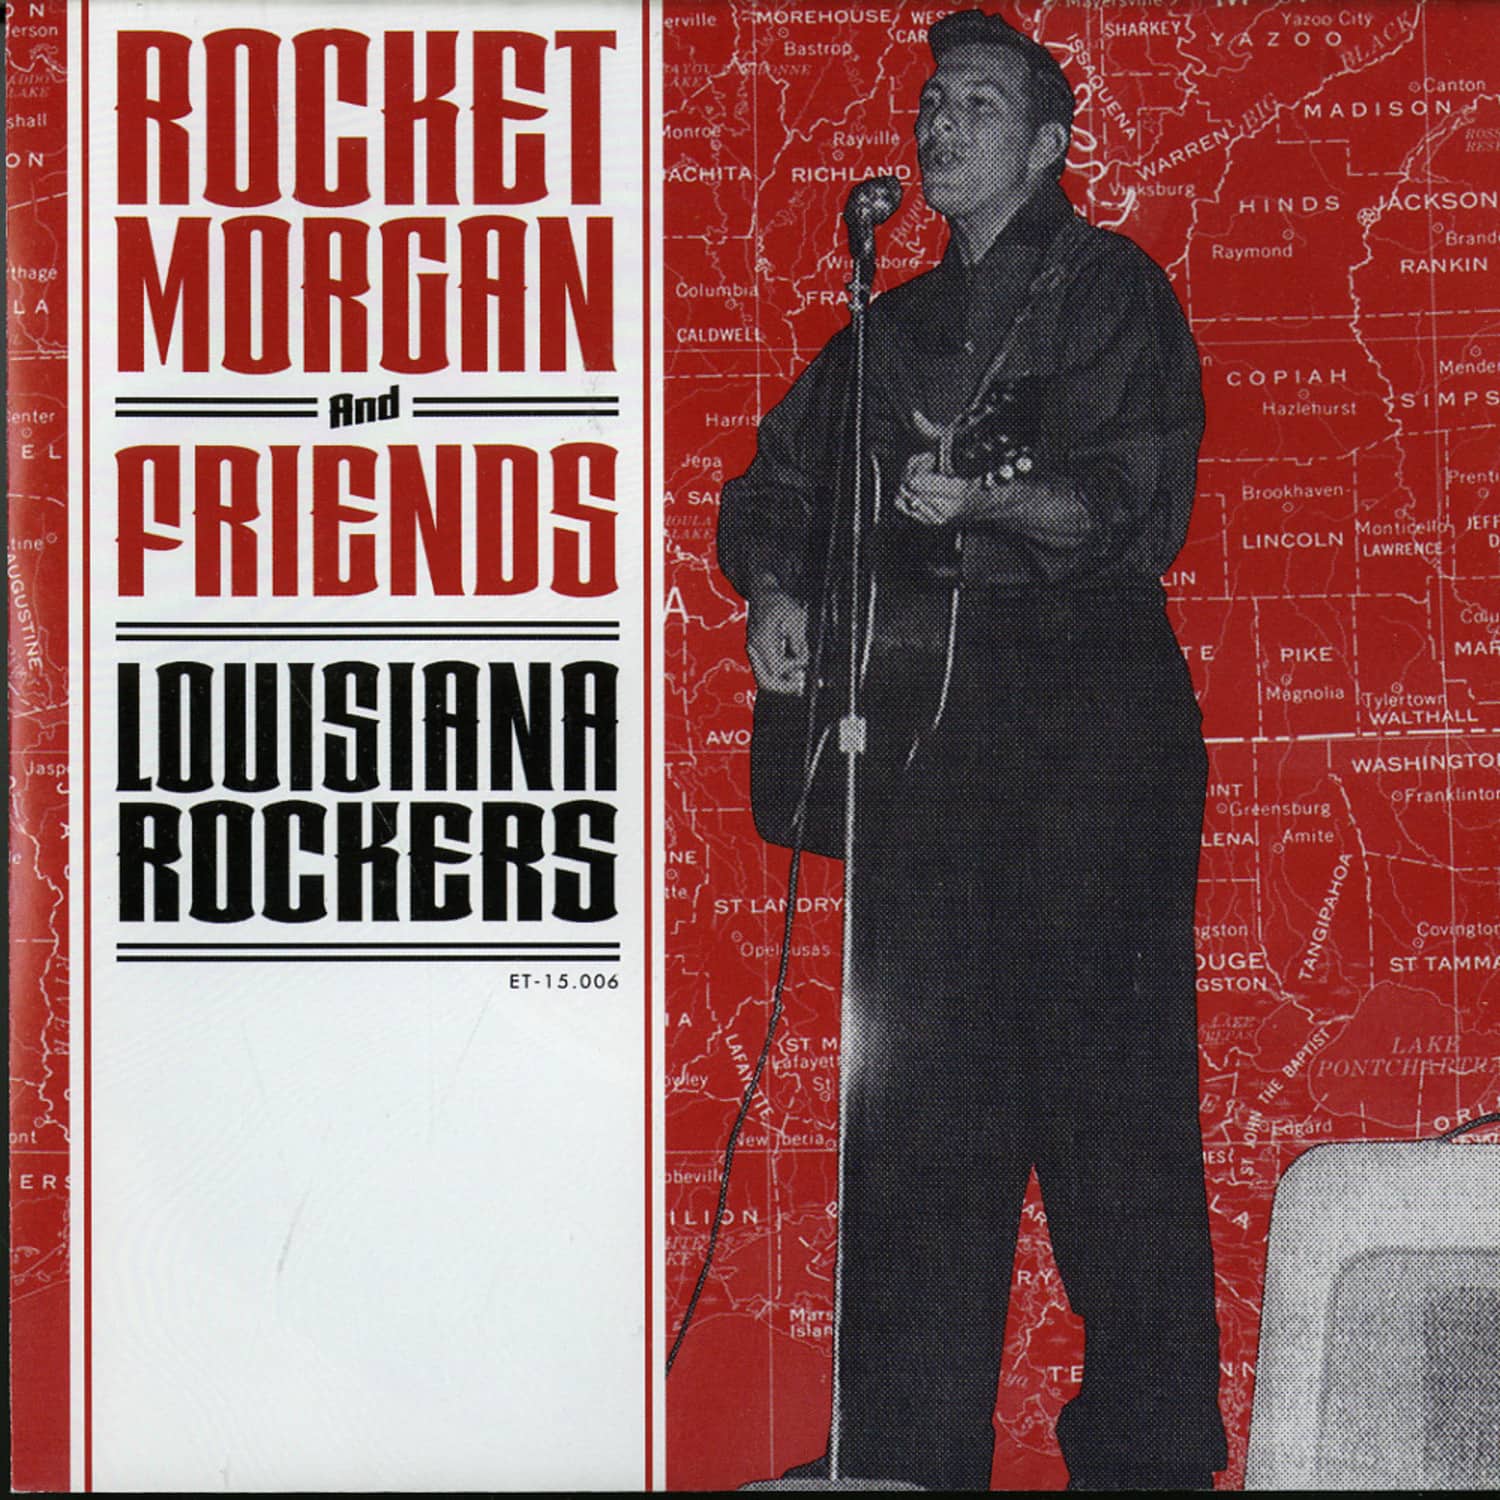 Rocket Morgan & Friends - LOUISIANA ROCKERS 